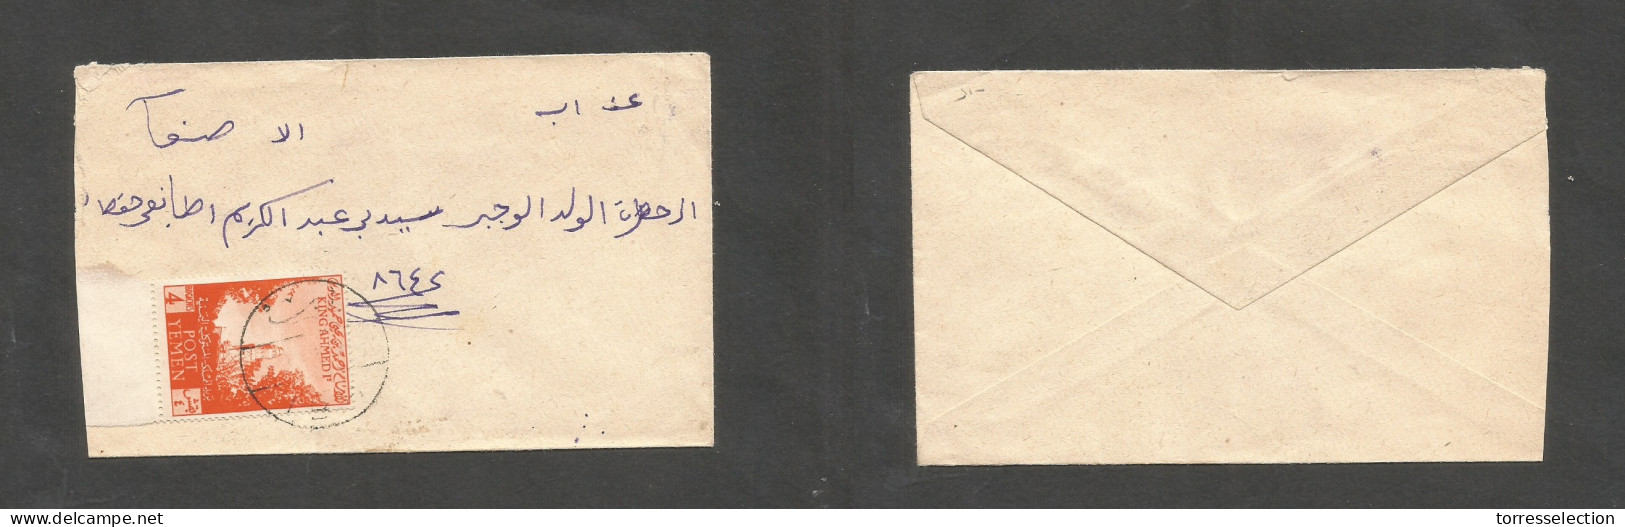 YEMEN. C. 1950s. Ibido Local Usage. Fkd 4 Bos Orange Envelope, Tied Bilingual Cds. SALE. - Yémen